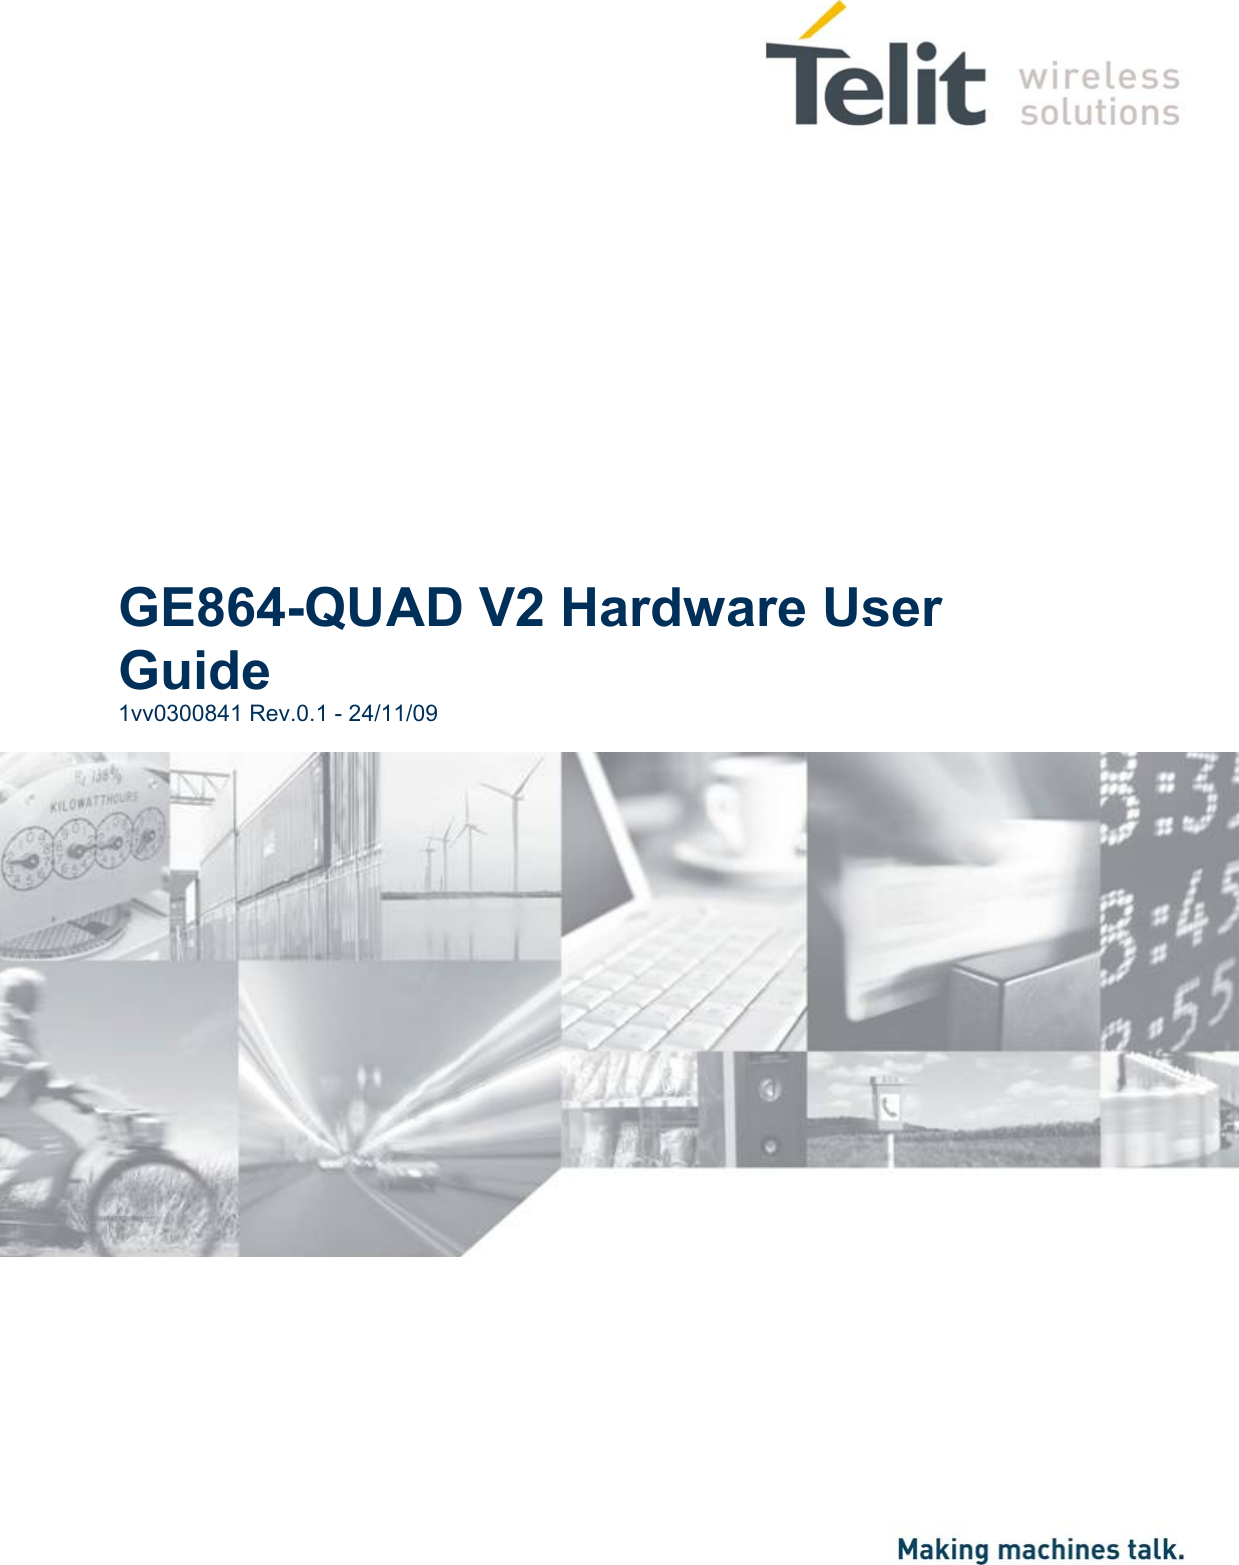           GE864-QUAD V2 Hardware User Guide 1vv0300841 Rev.0.1 - 24/11/09                         